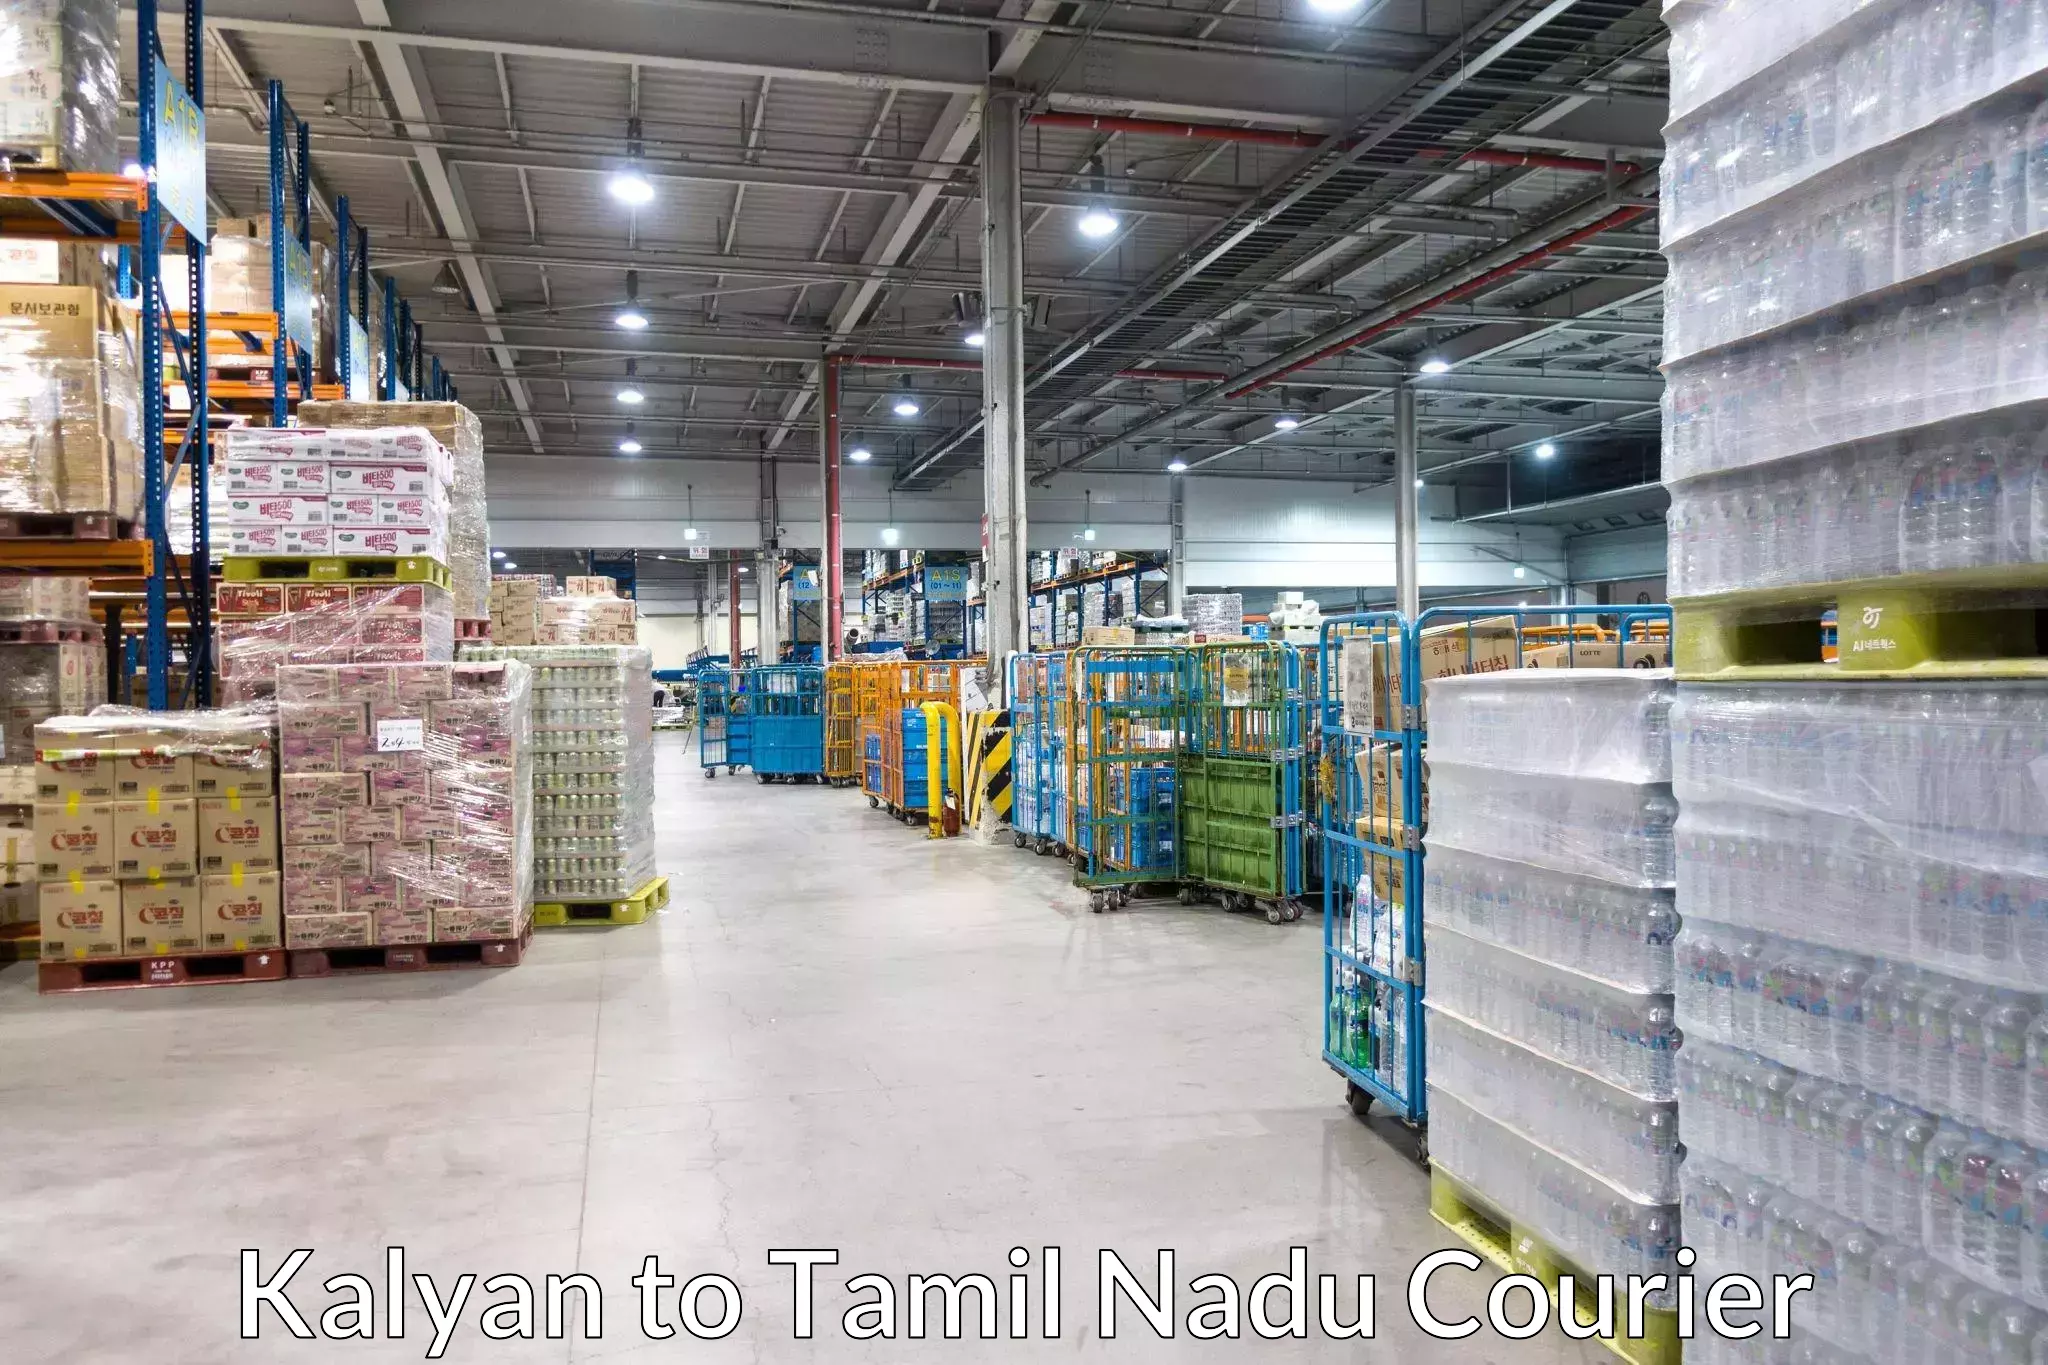 Express logistics providers Kalyan to Tamil Nadu